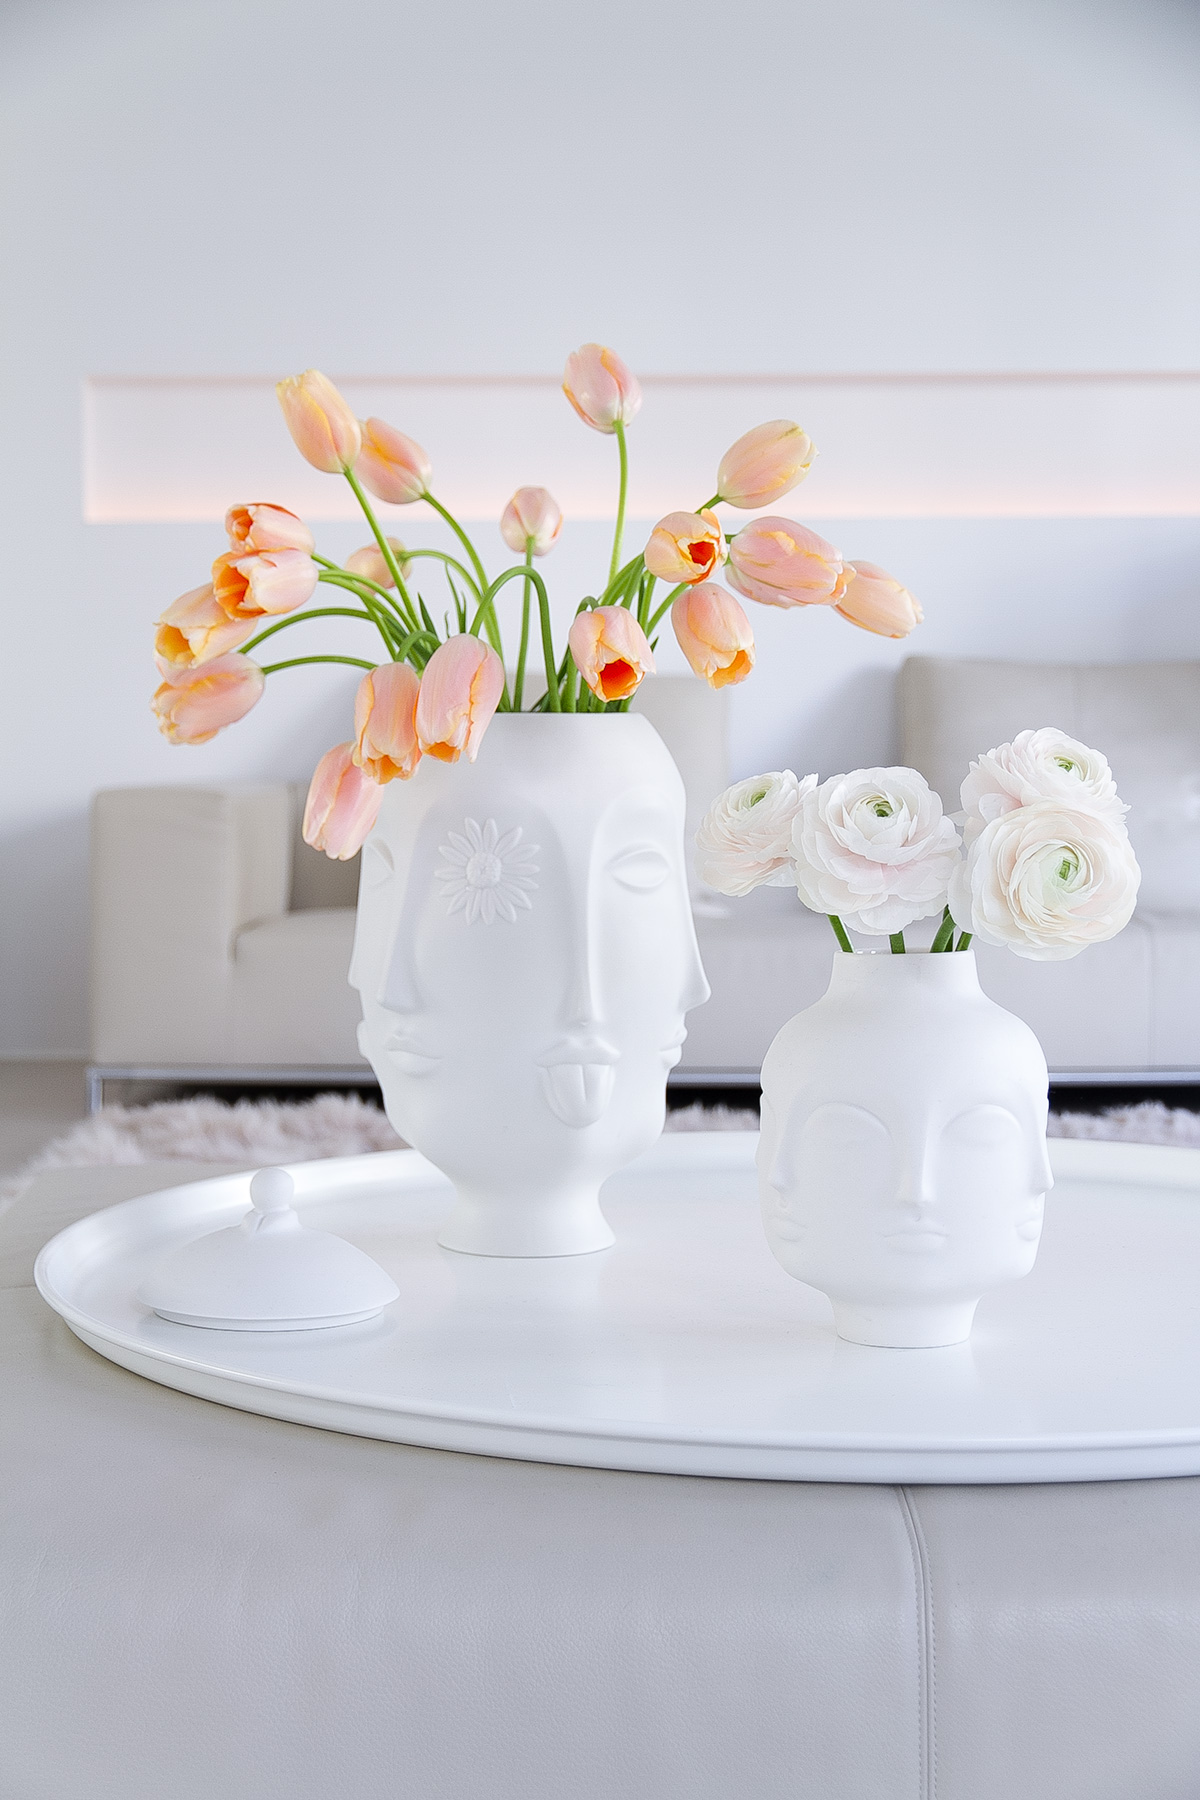 pink peonies and tulips in white Jonathan Adler porcelain Dora Maar vases, spring flowers, blogpost Lifetimepieces.com